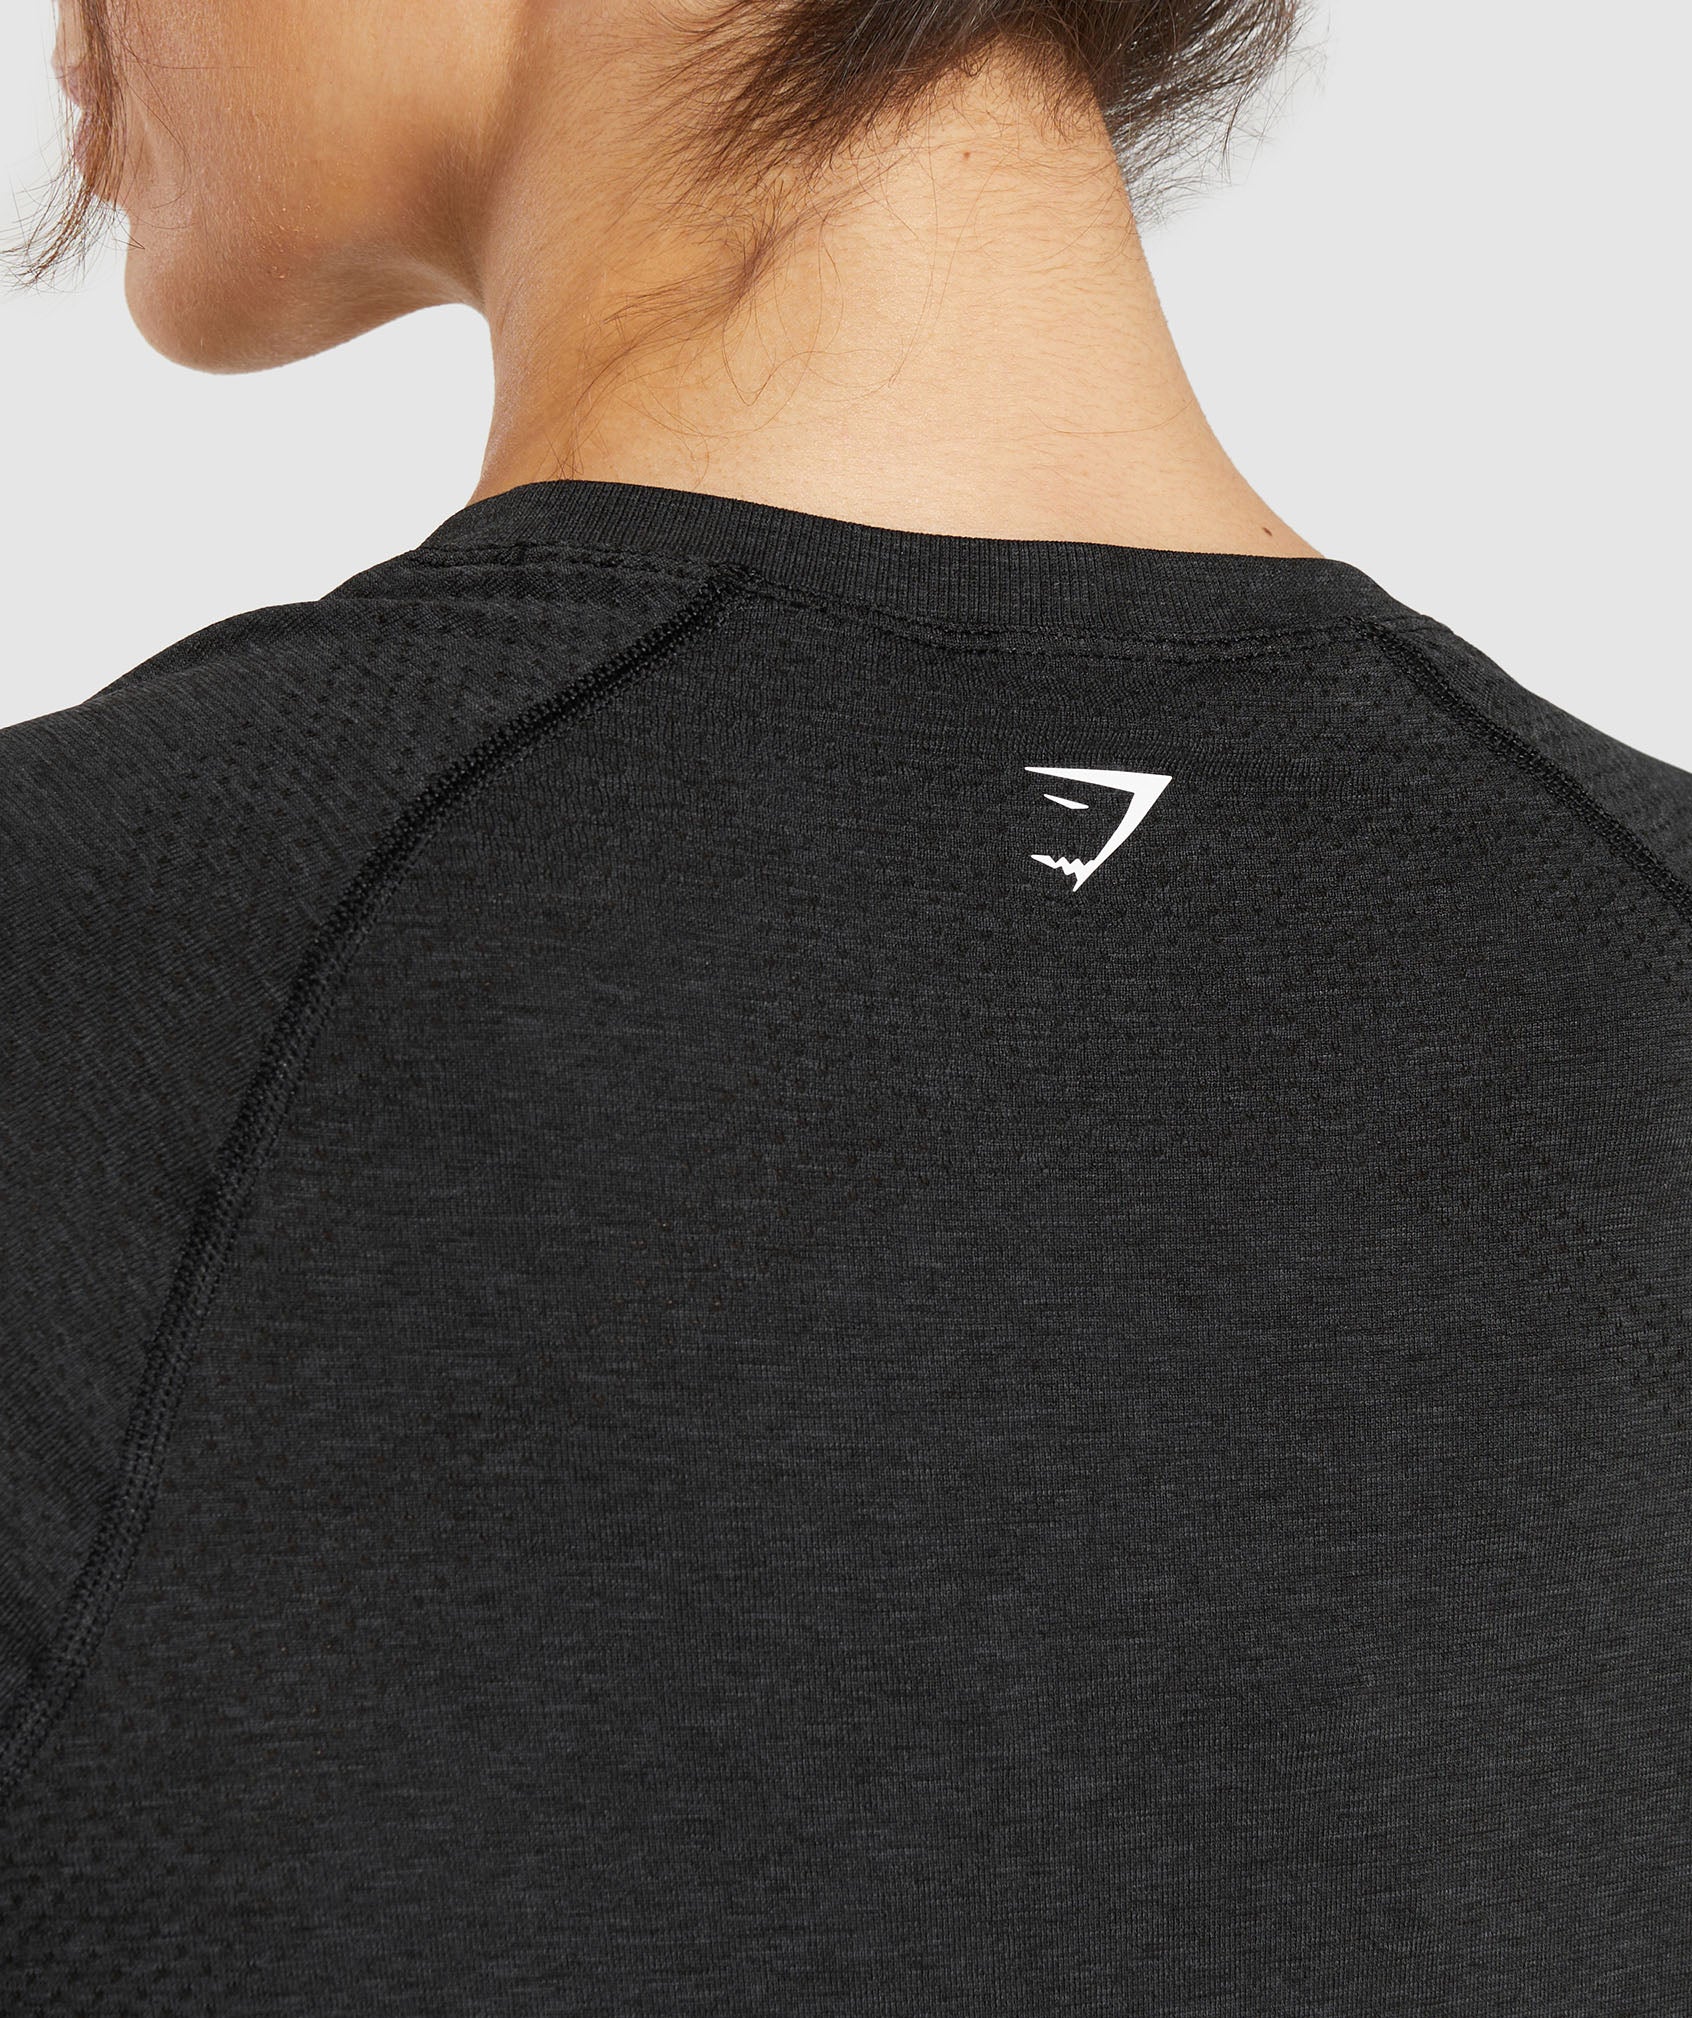 Vital Seamless 2.0 Light T-Shirt in Black Marl